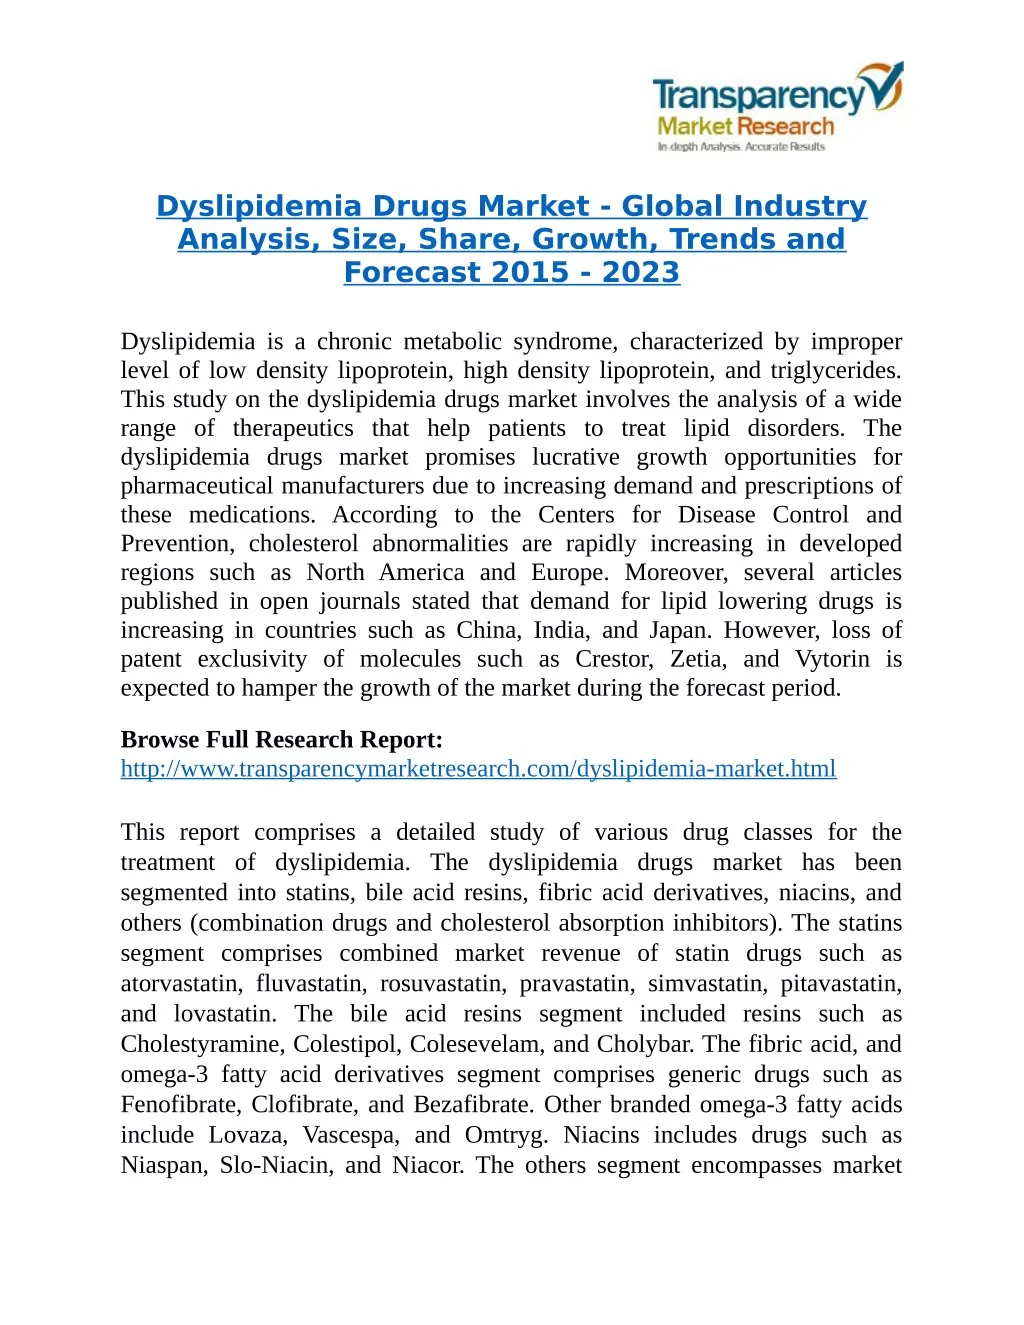 dyslipidemia drugs market global industry